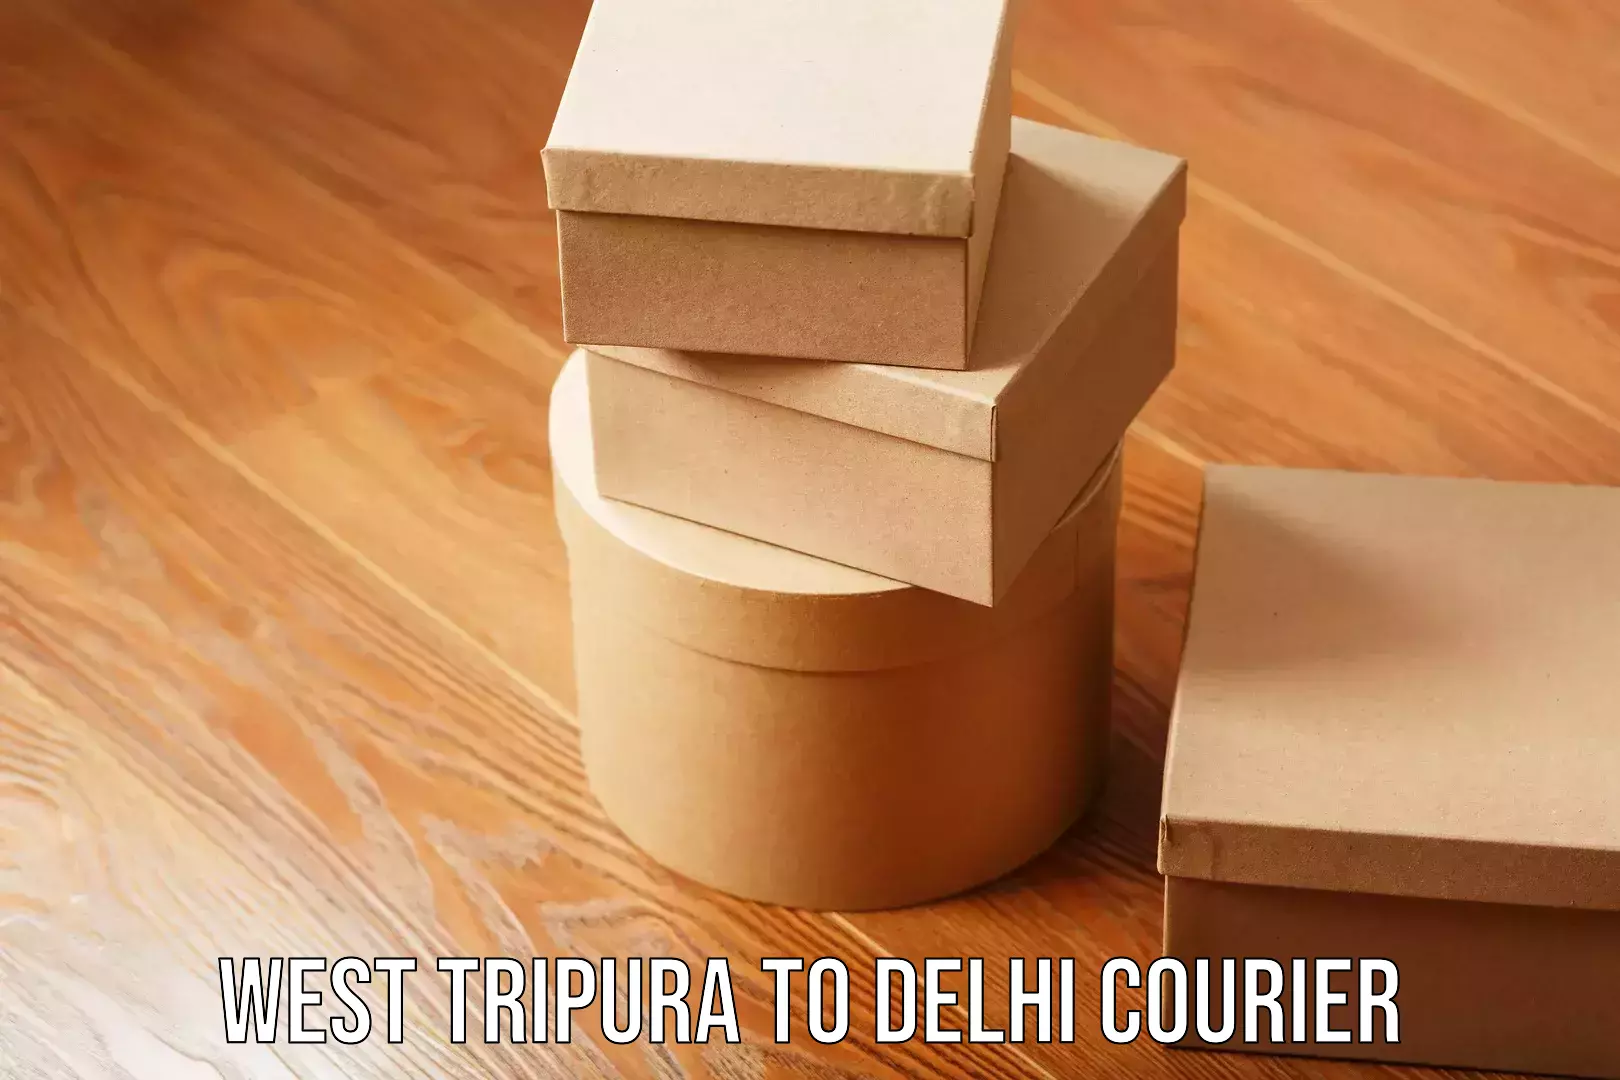 Fastest parcel delivery West Tripura to Delhi